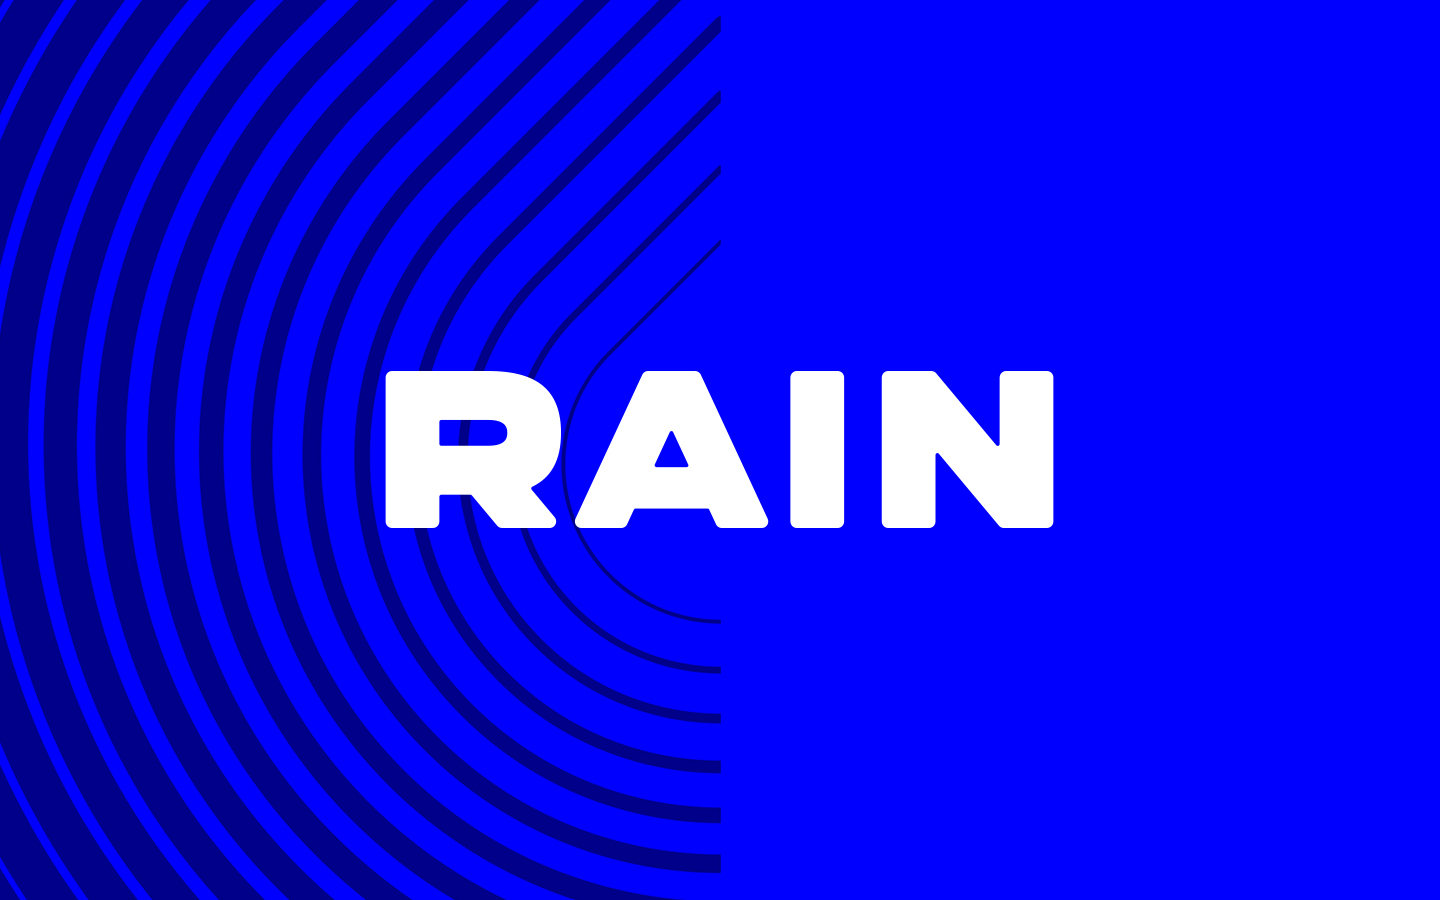 RAIN audio branding case study banner.